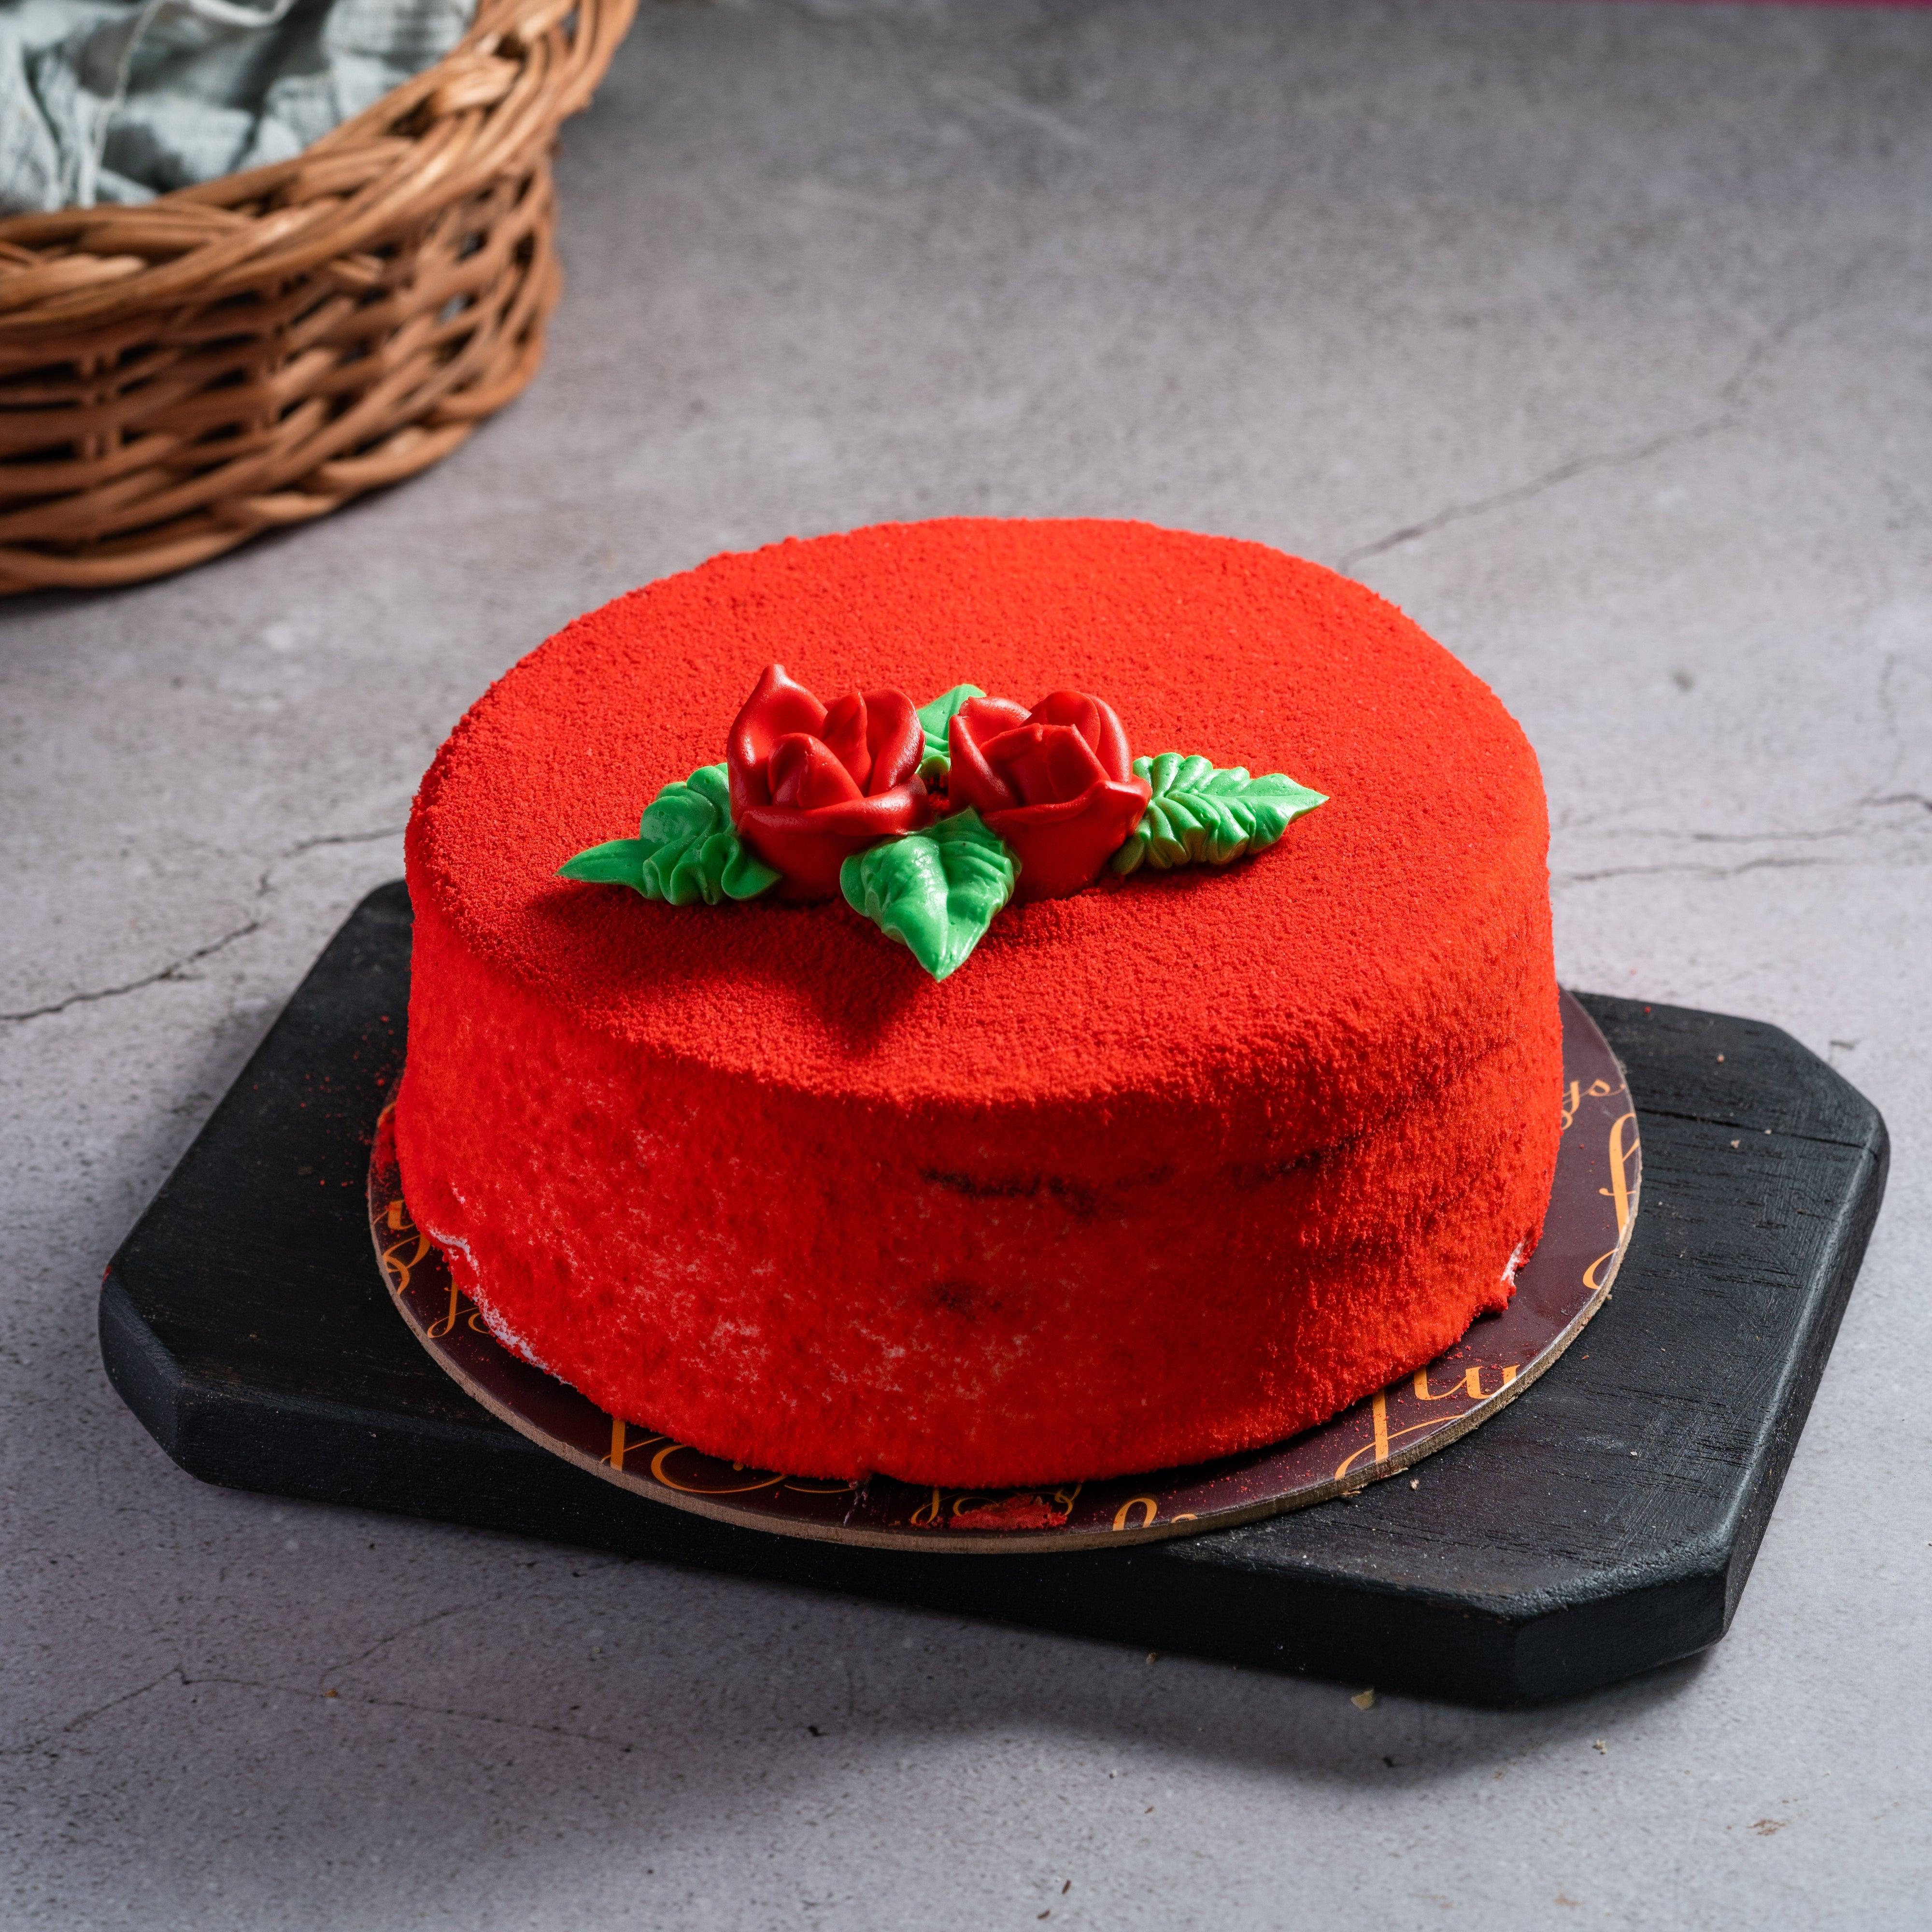 BEST Red Velvet Cake from Scratch - One Sweet Appetite